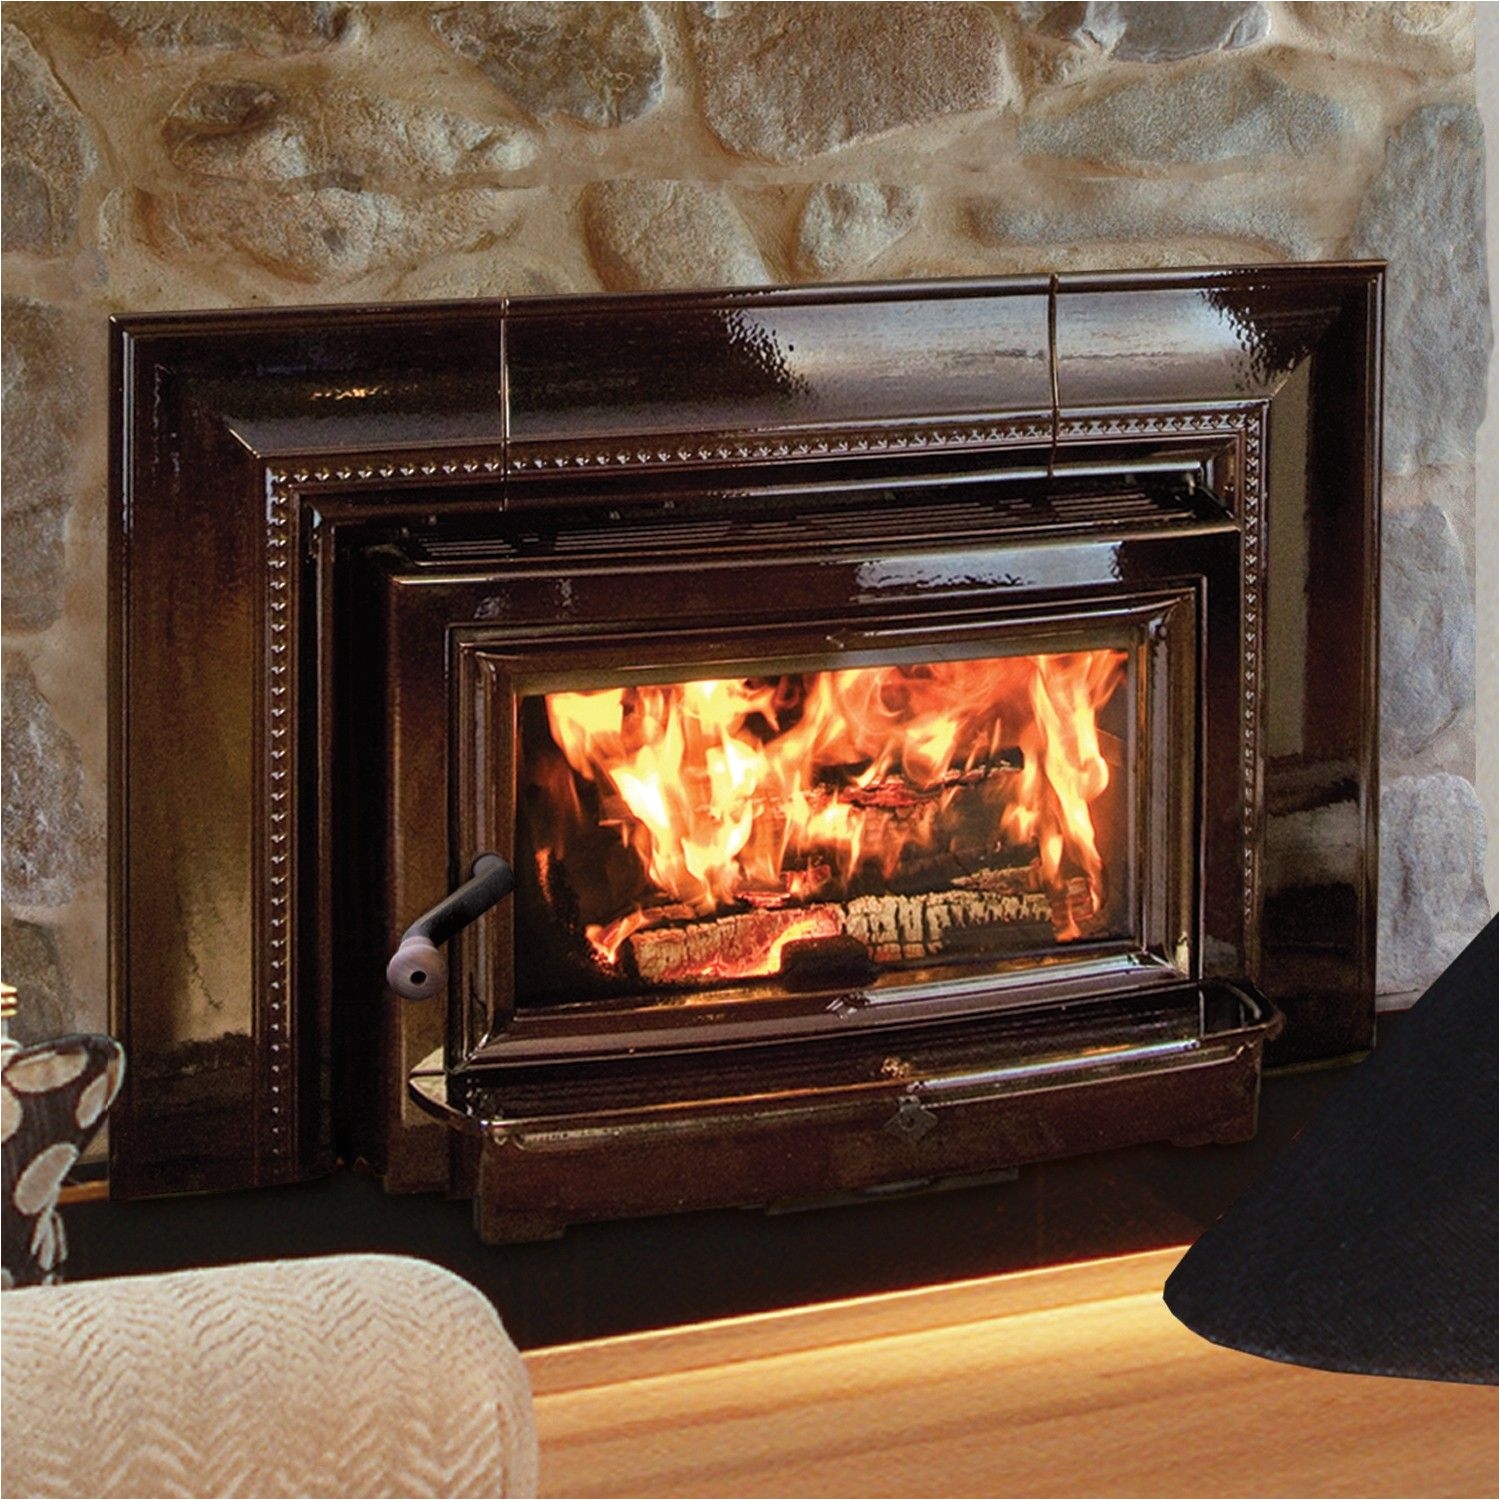 Heat and Glo Fireplace New Propane Fireplace Insert Repair